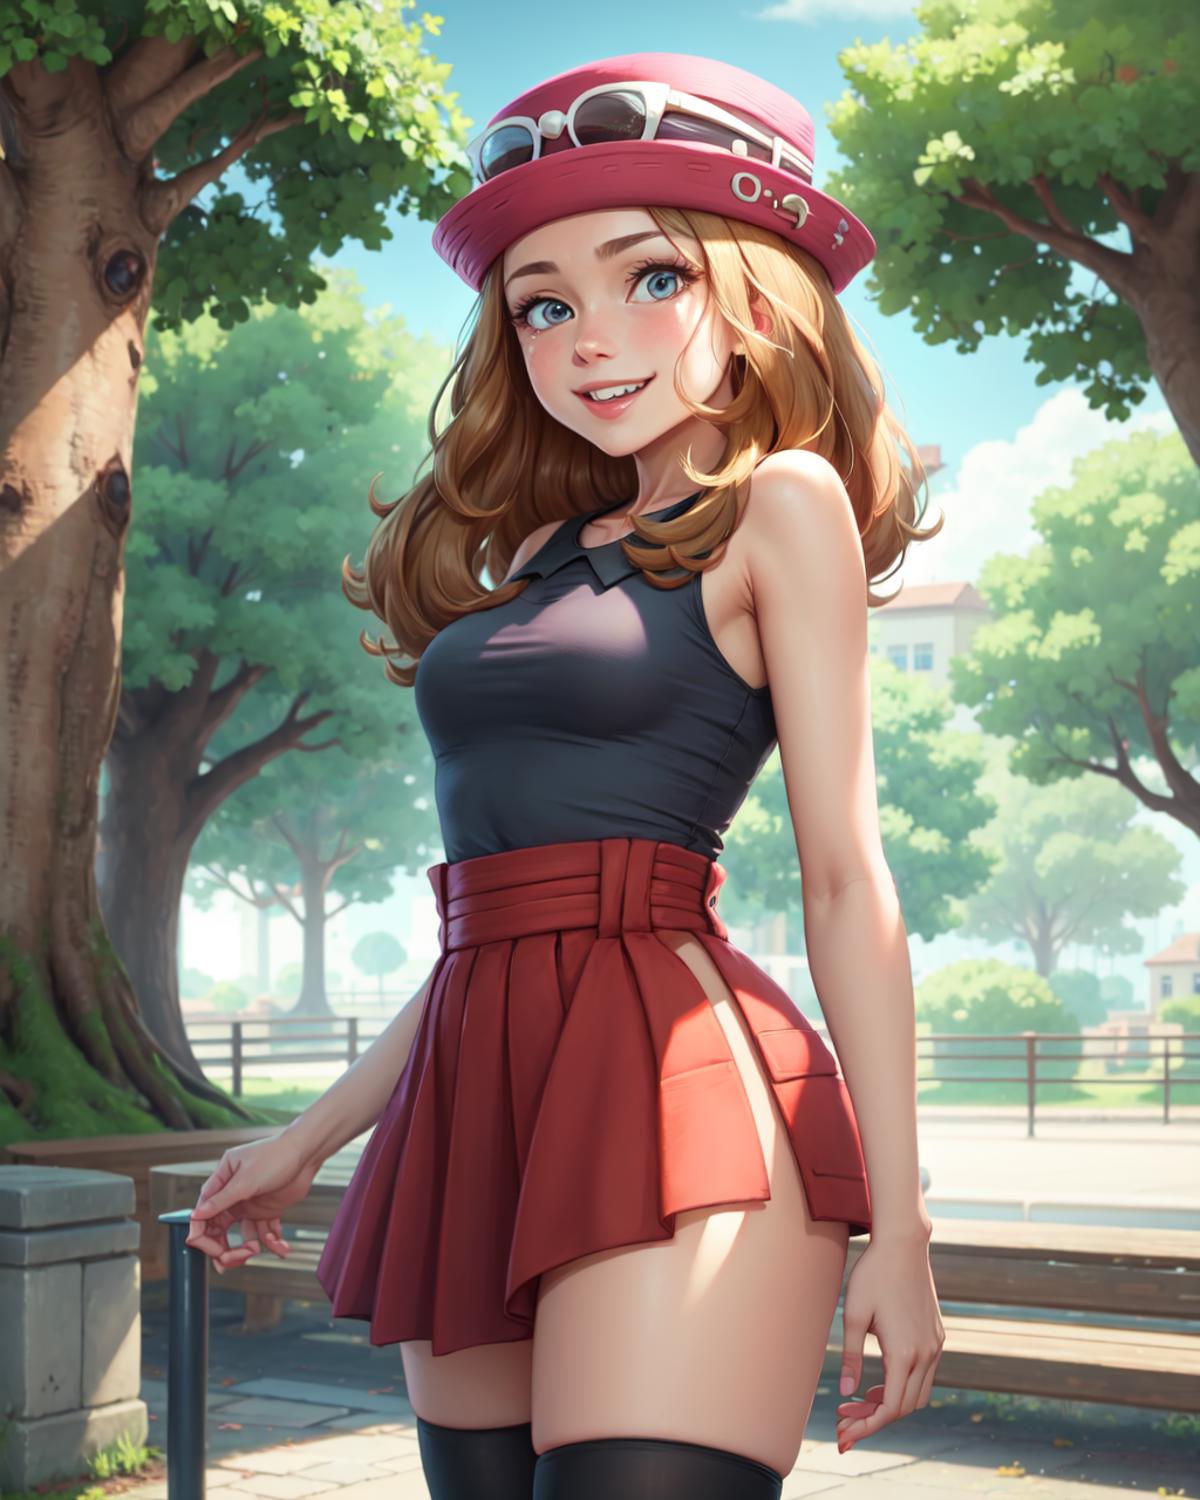 [SD 1.5] Pokemon - Serena (Game) image by Manofwar07